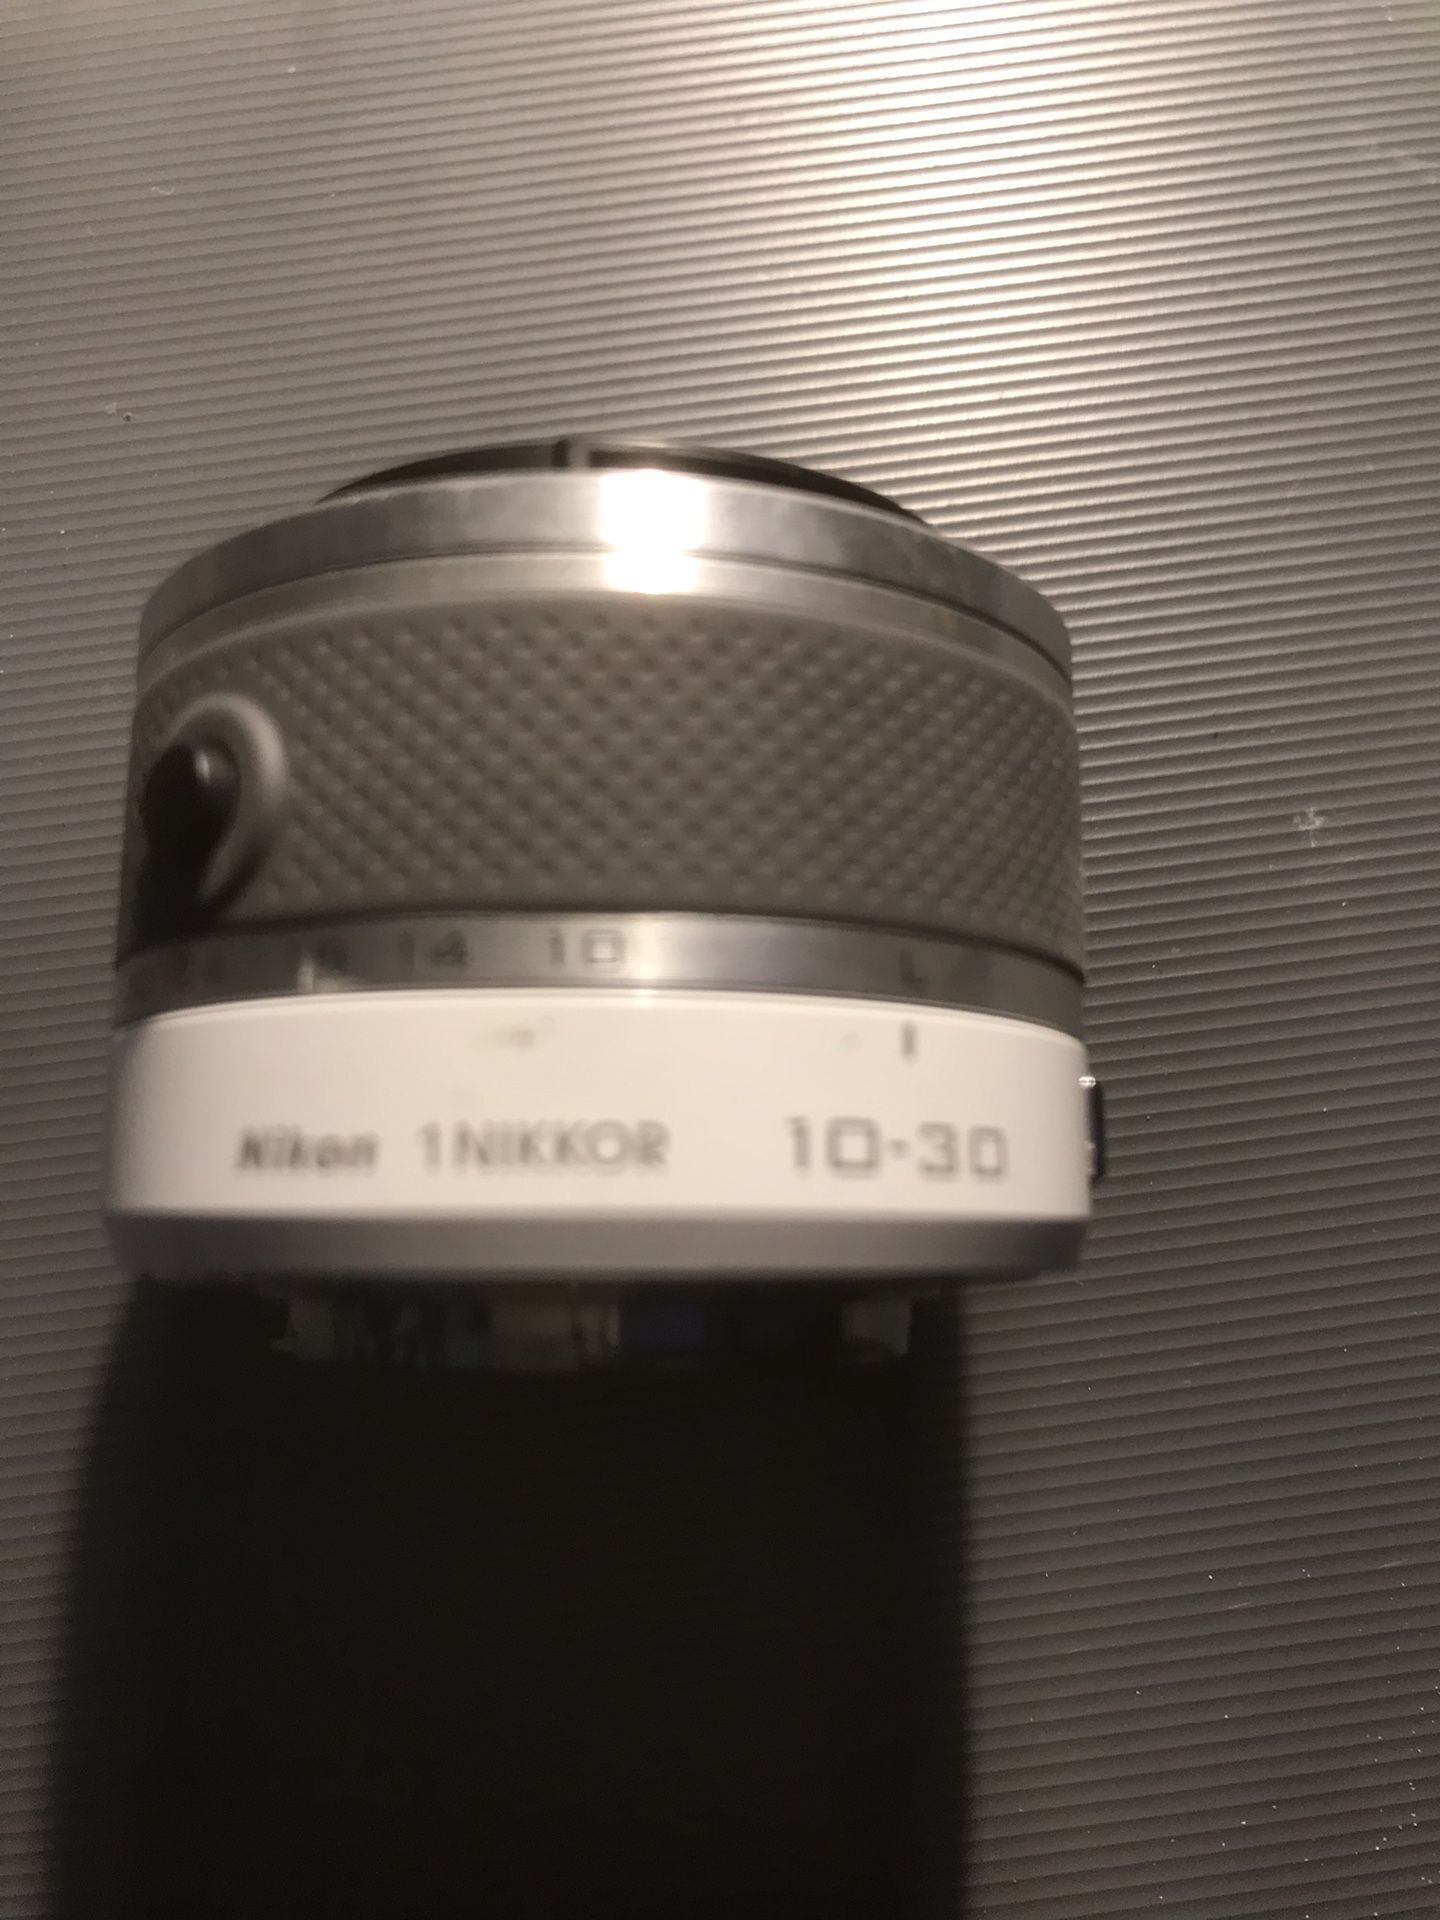 Nikon 1 Nikkior 10-30 Camera Zoom lense